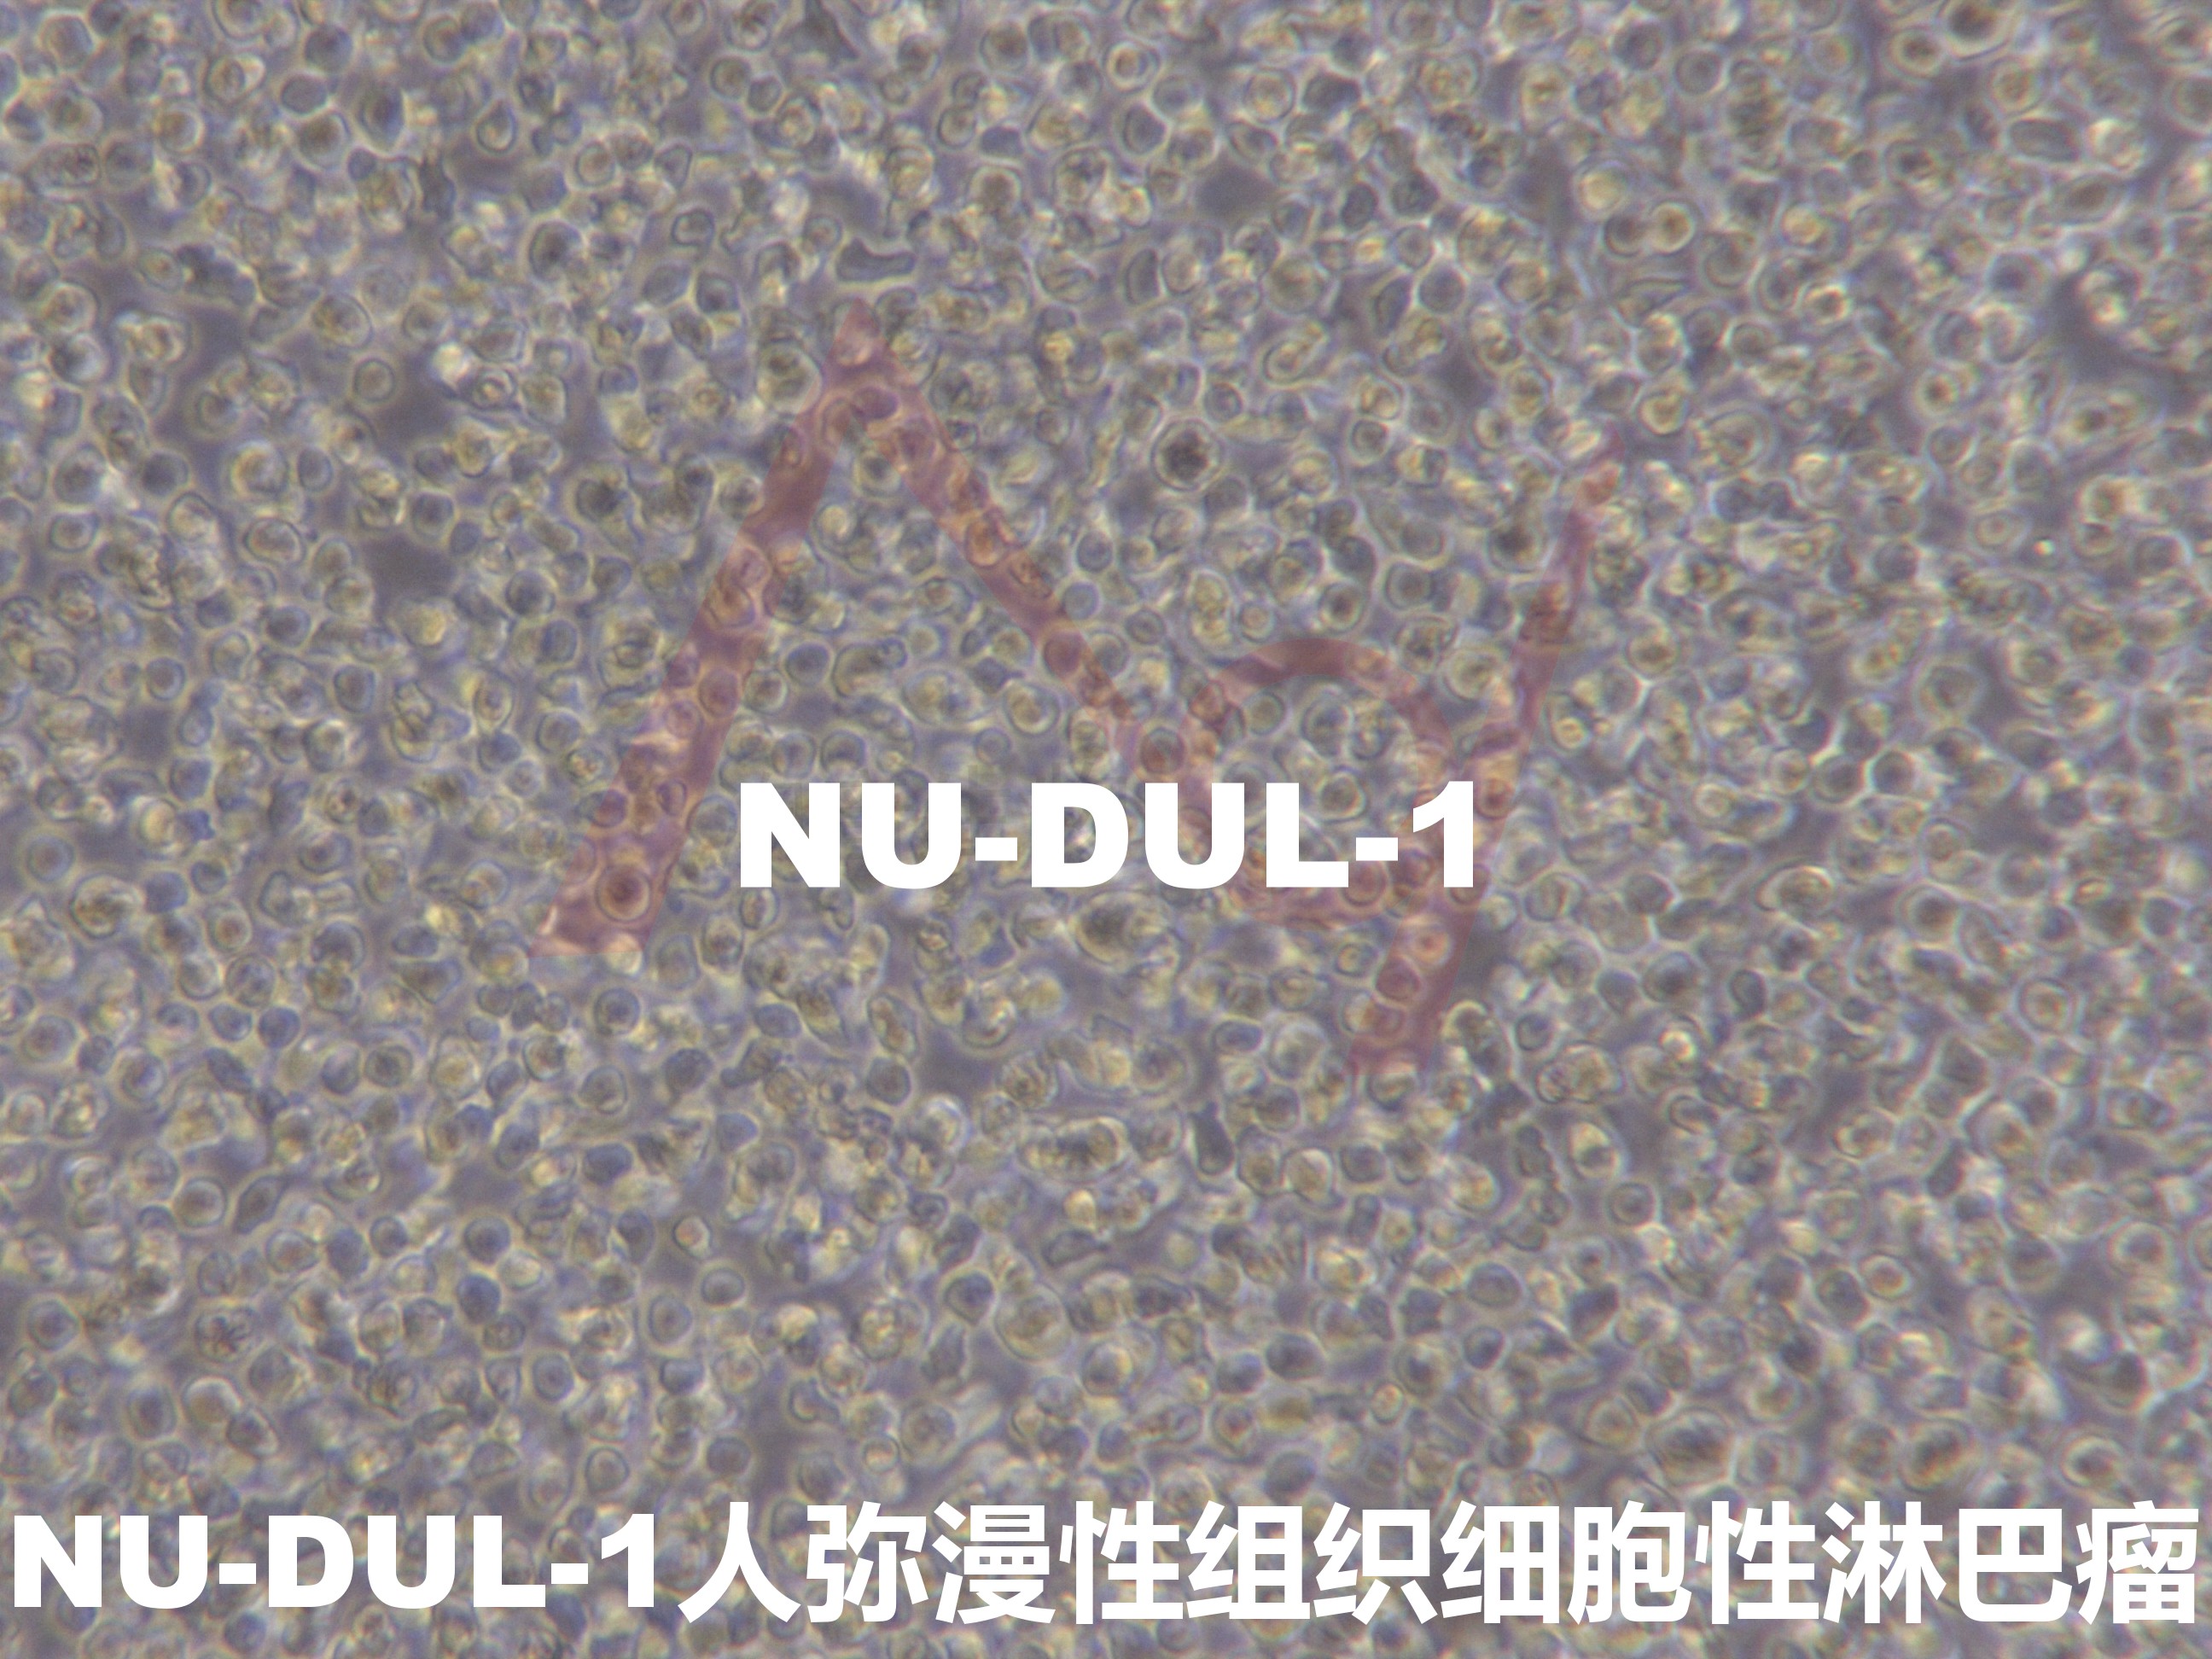 NU-DUL-1【NUDUL-1; NUDUL1】弥漫性组织细胞性淋巴瘤